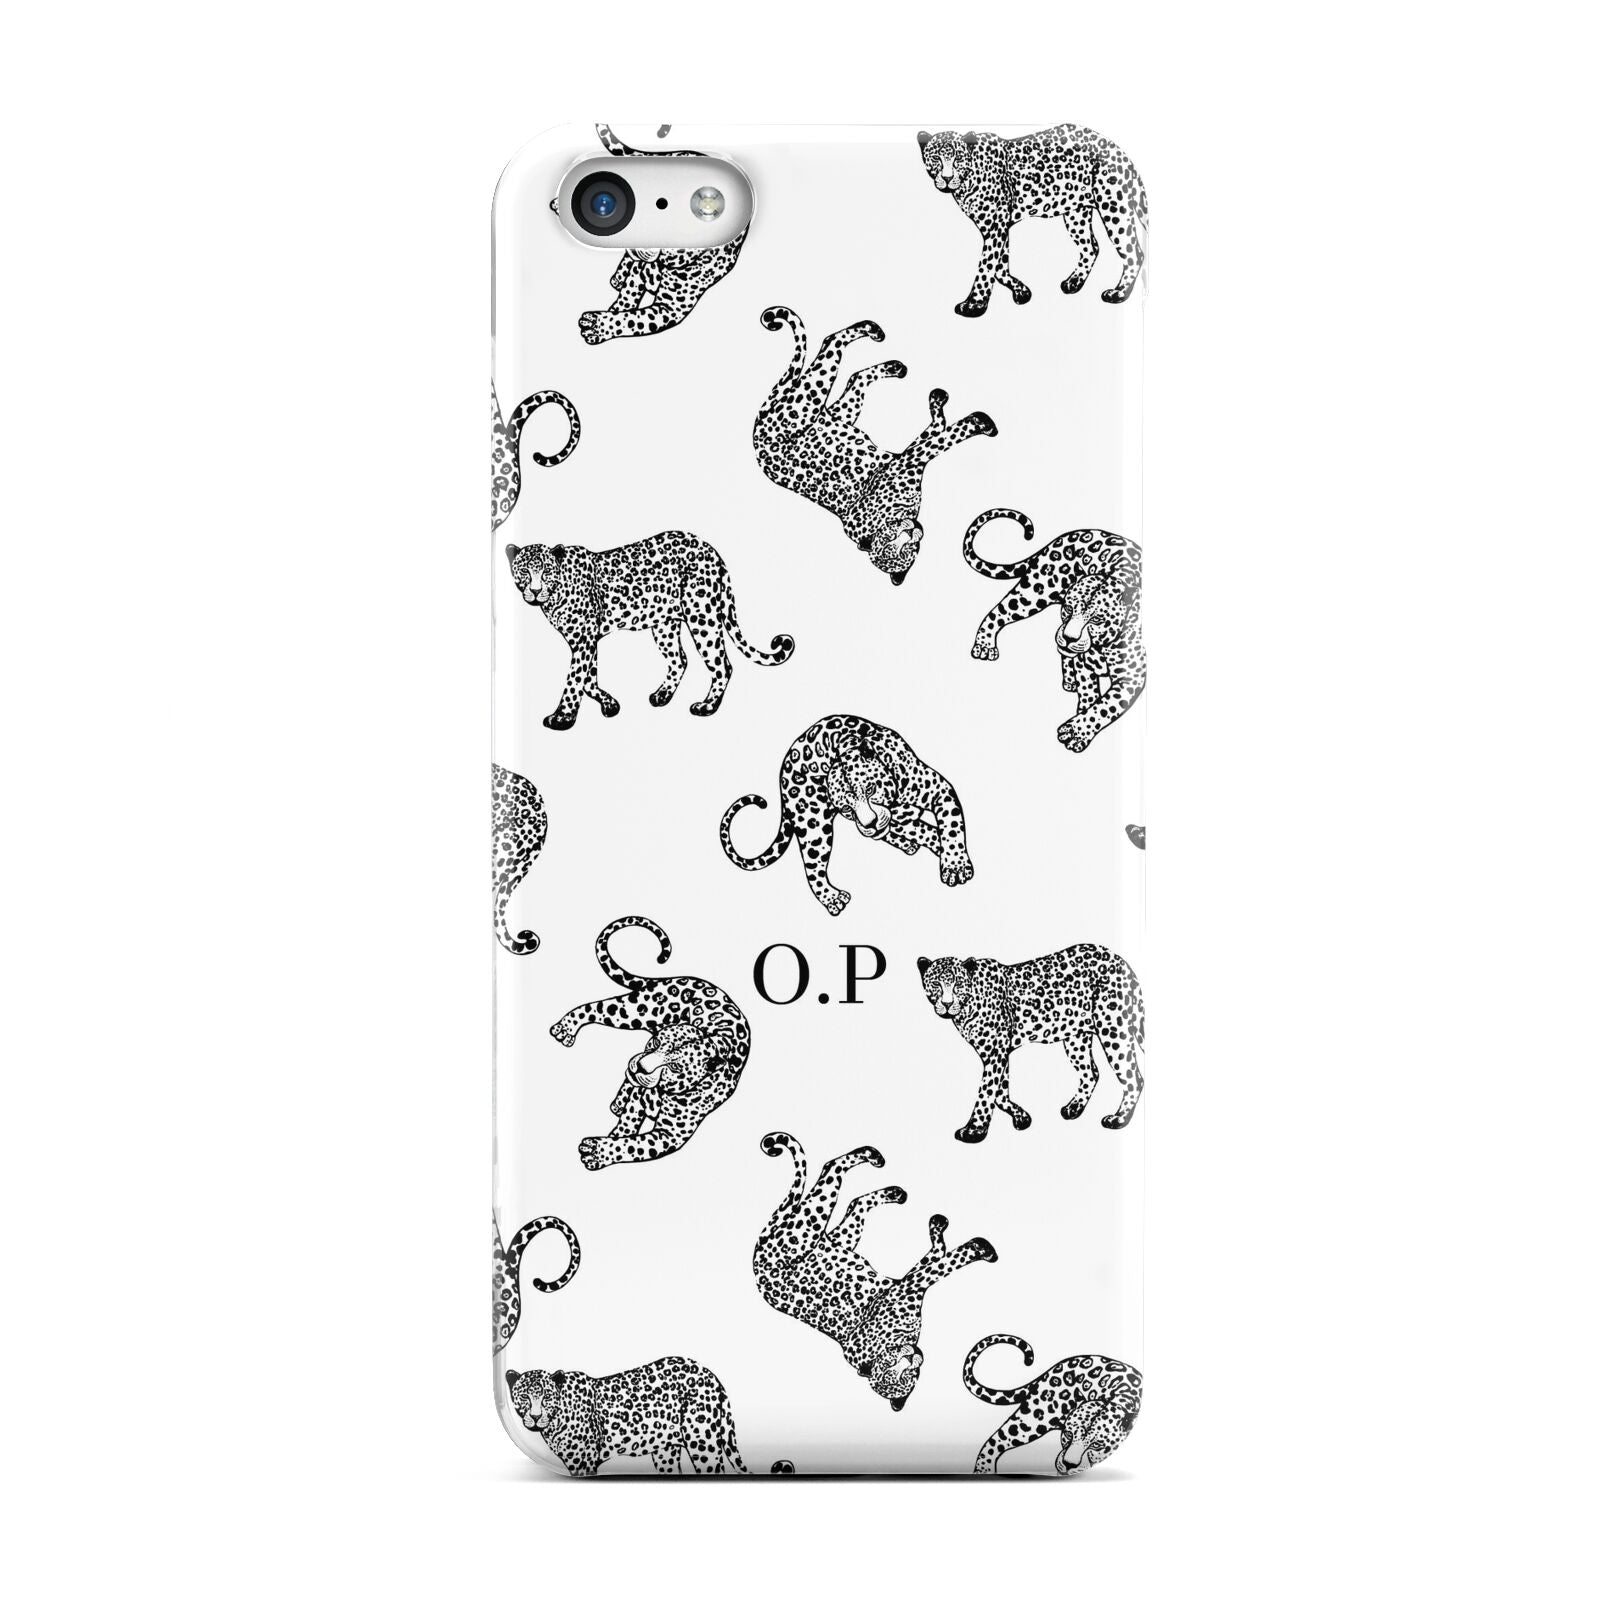 Monochrome Leopard Print Personalised Apple iPhone 5c Case